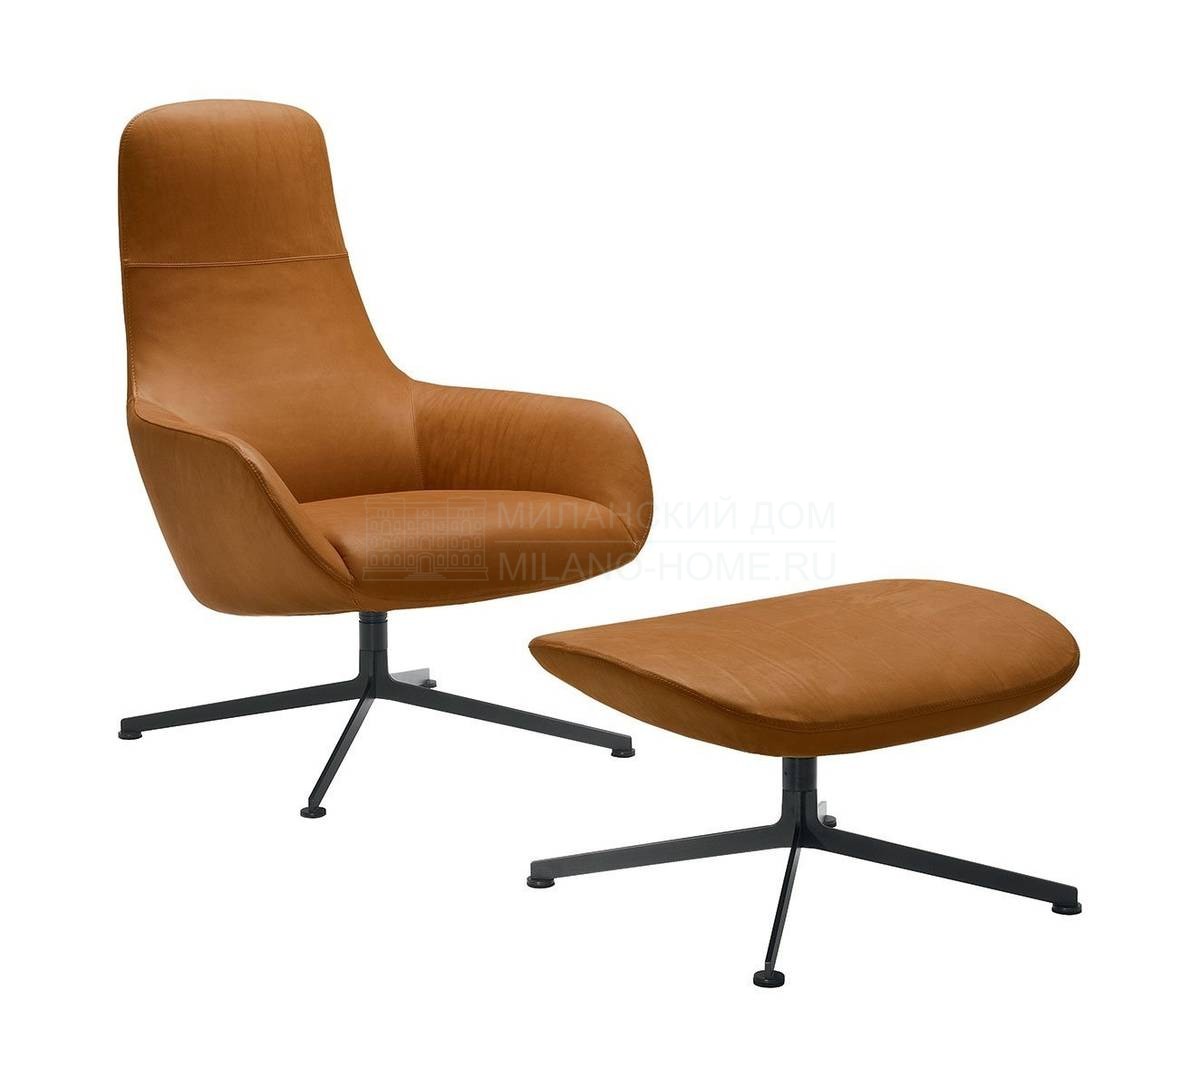 Кожаное кресло Kent armchair leather из Италии фабрики ZANOTTA